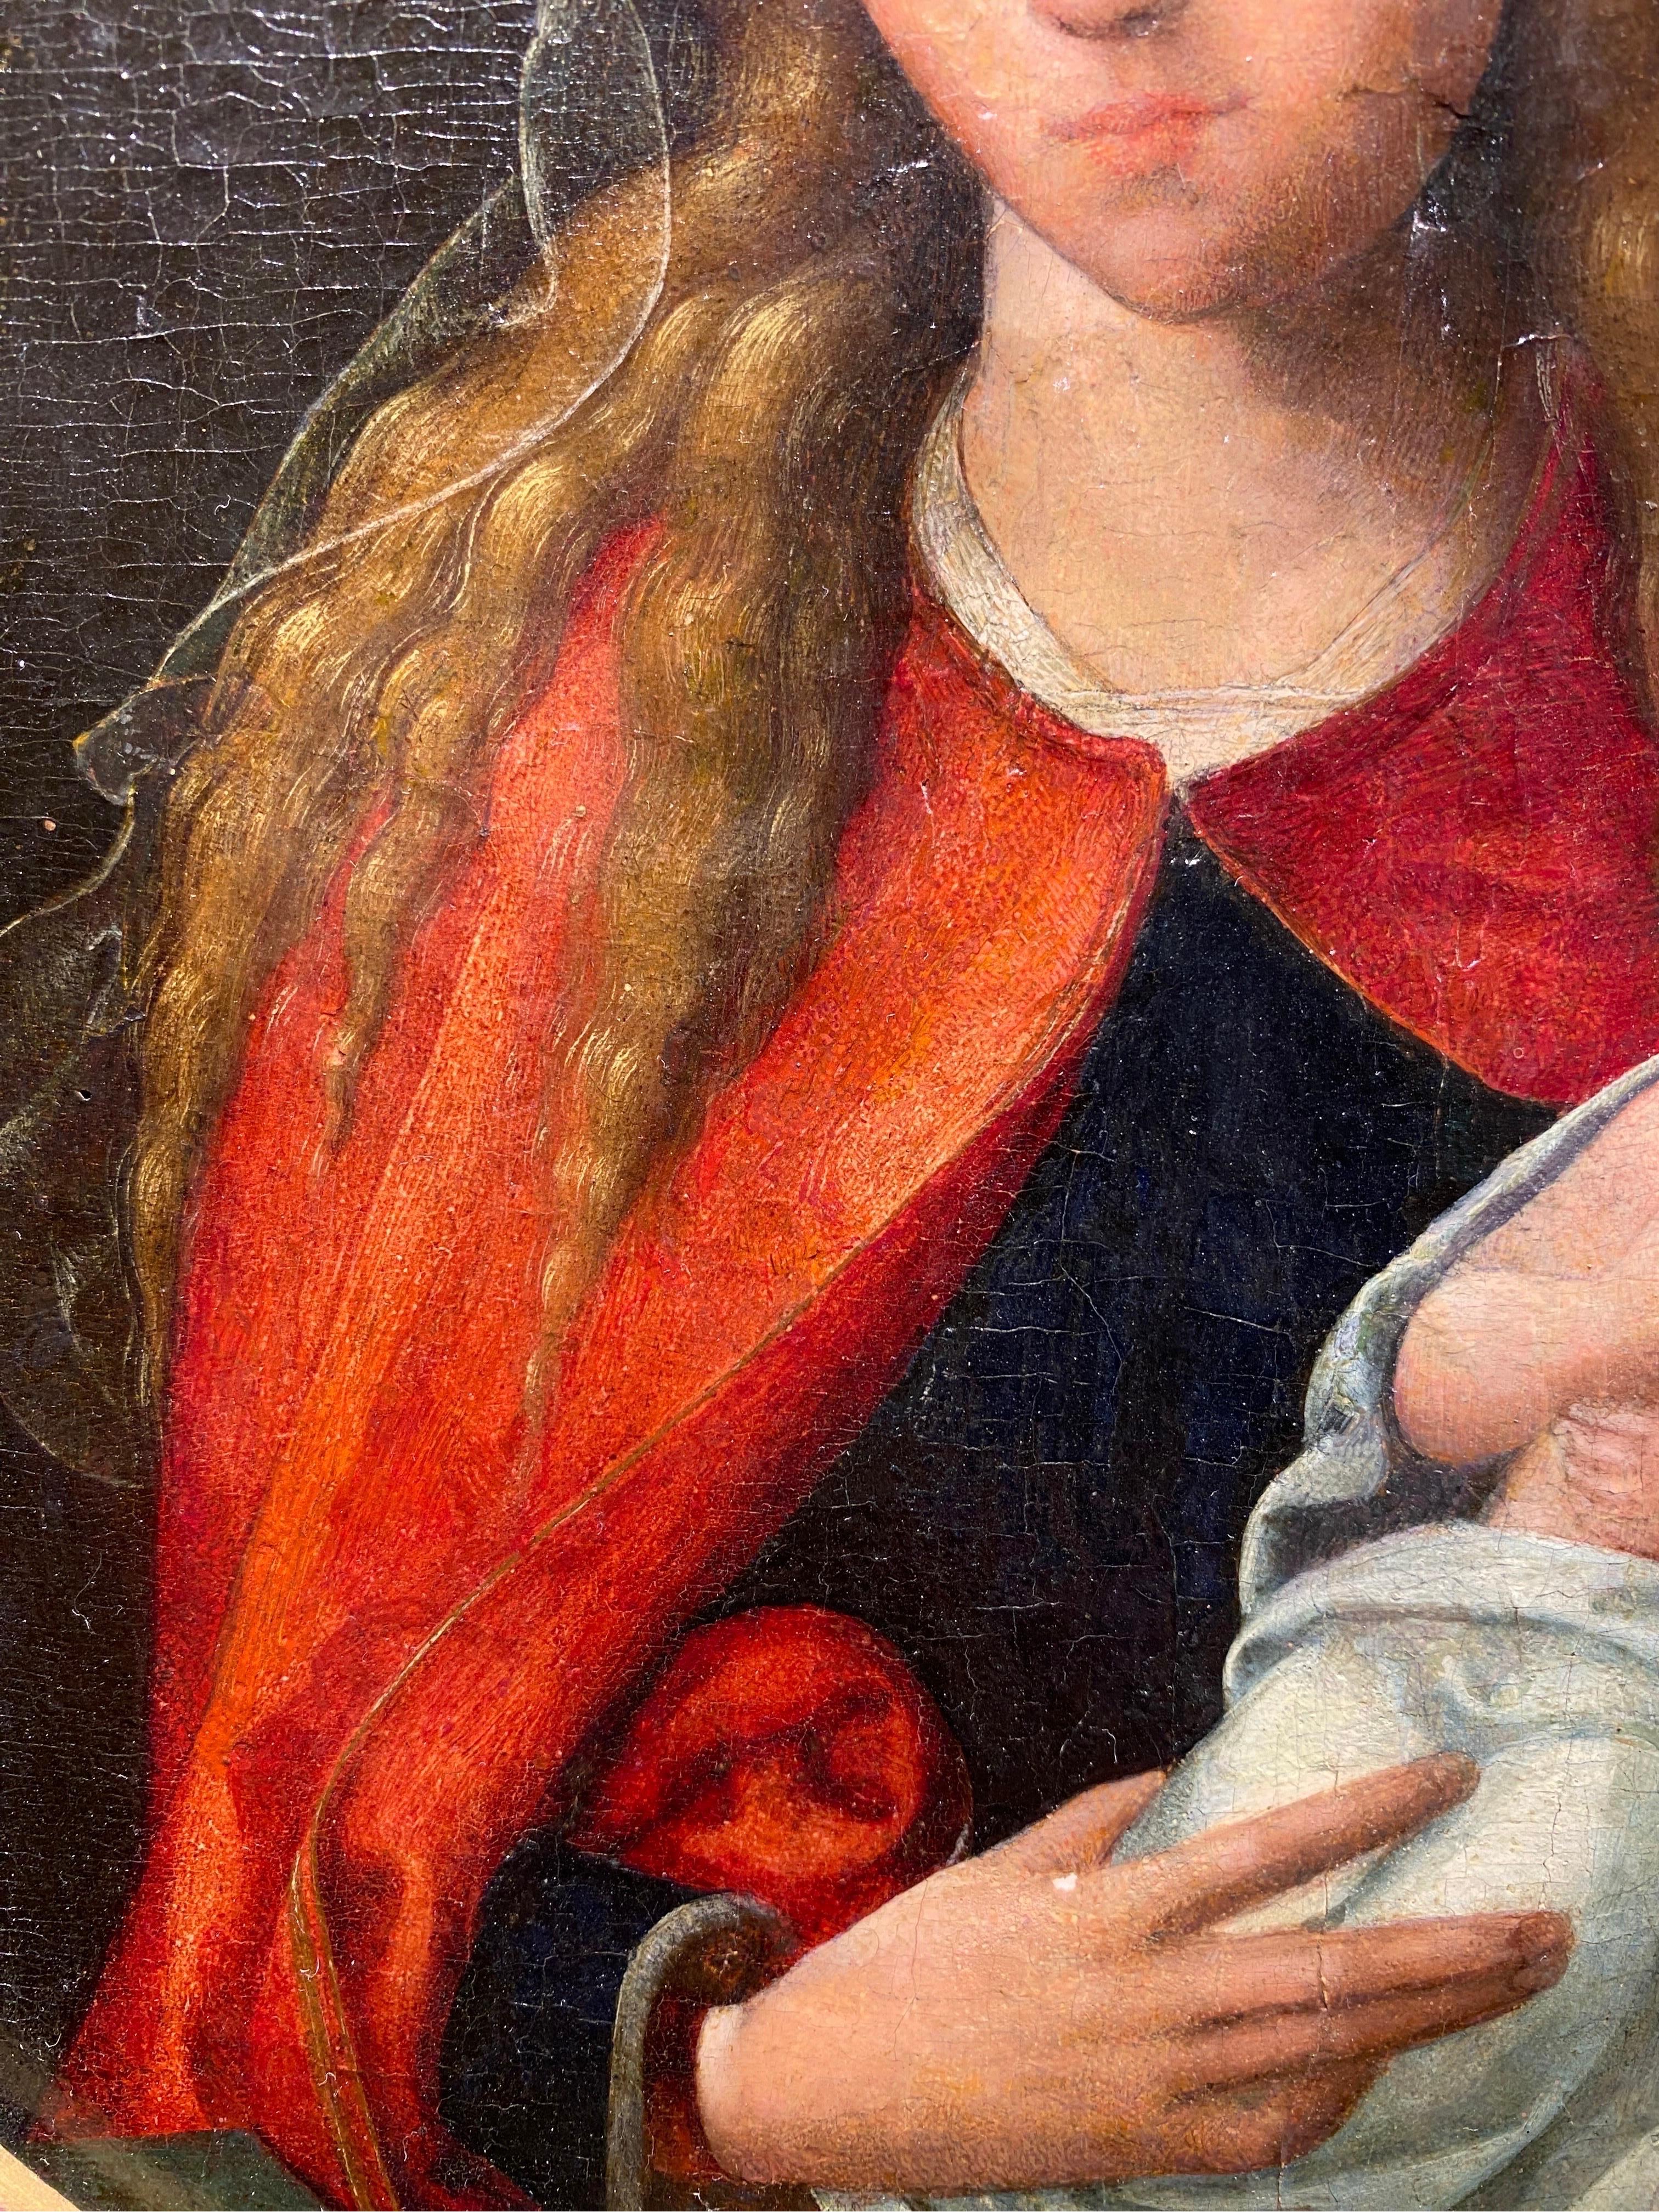 16 century
Virgin and child - Black Portrait Painting by Maestro de las medias figuras